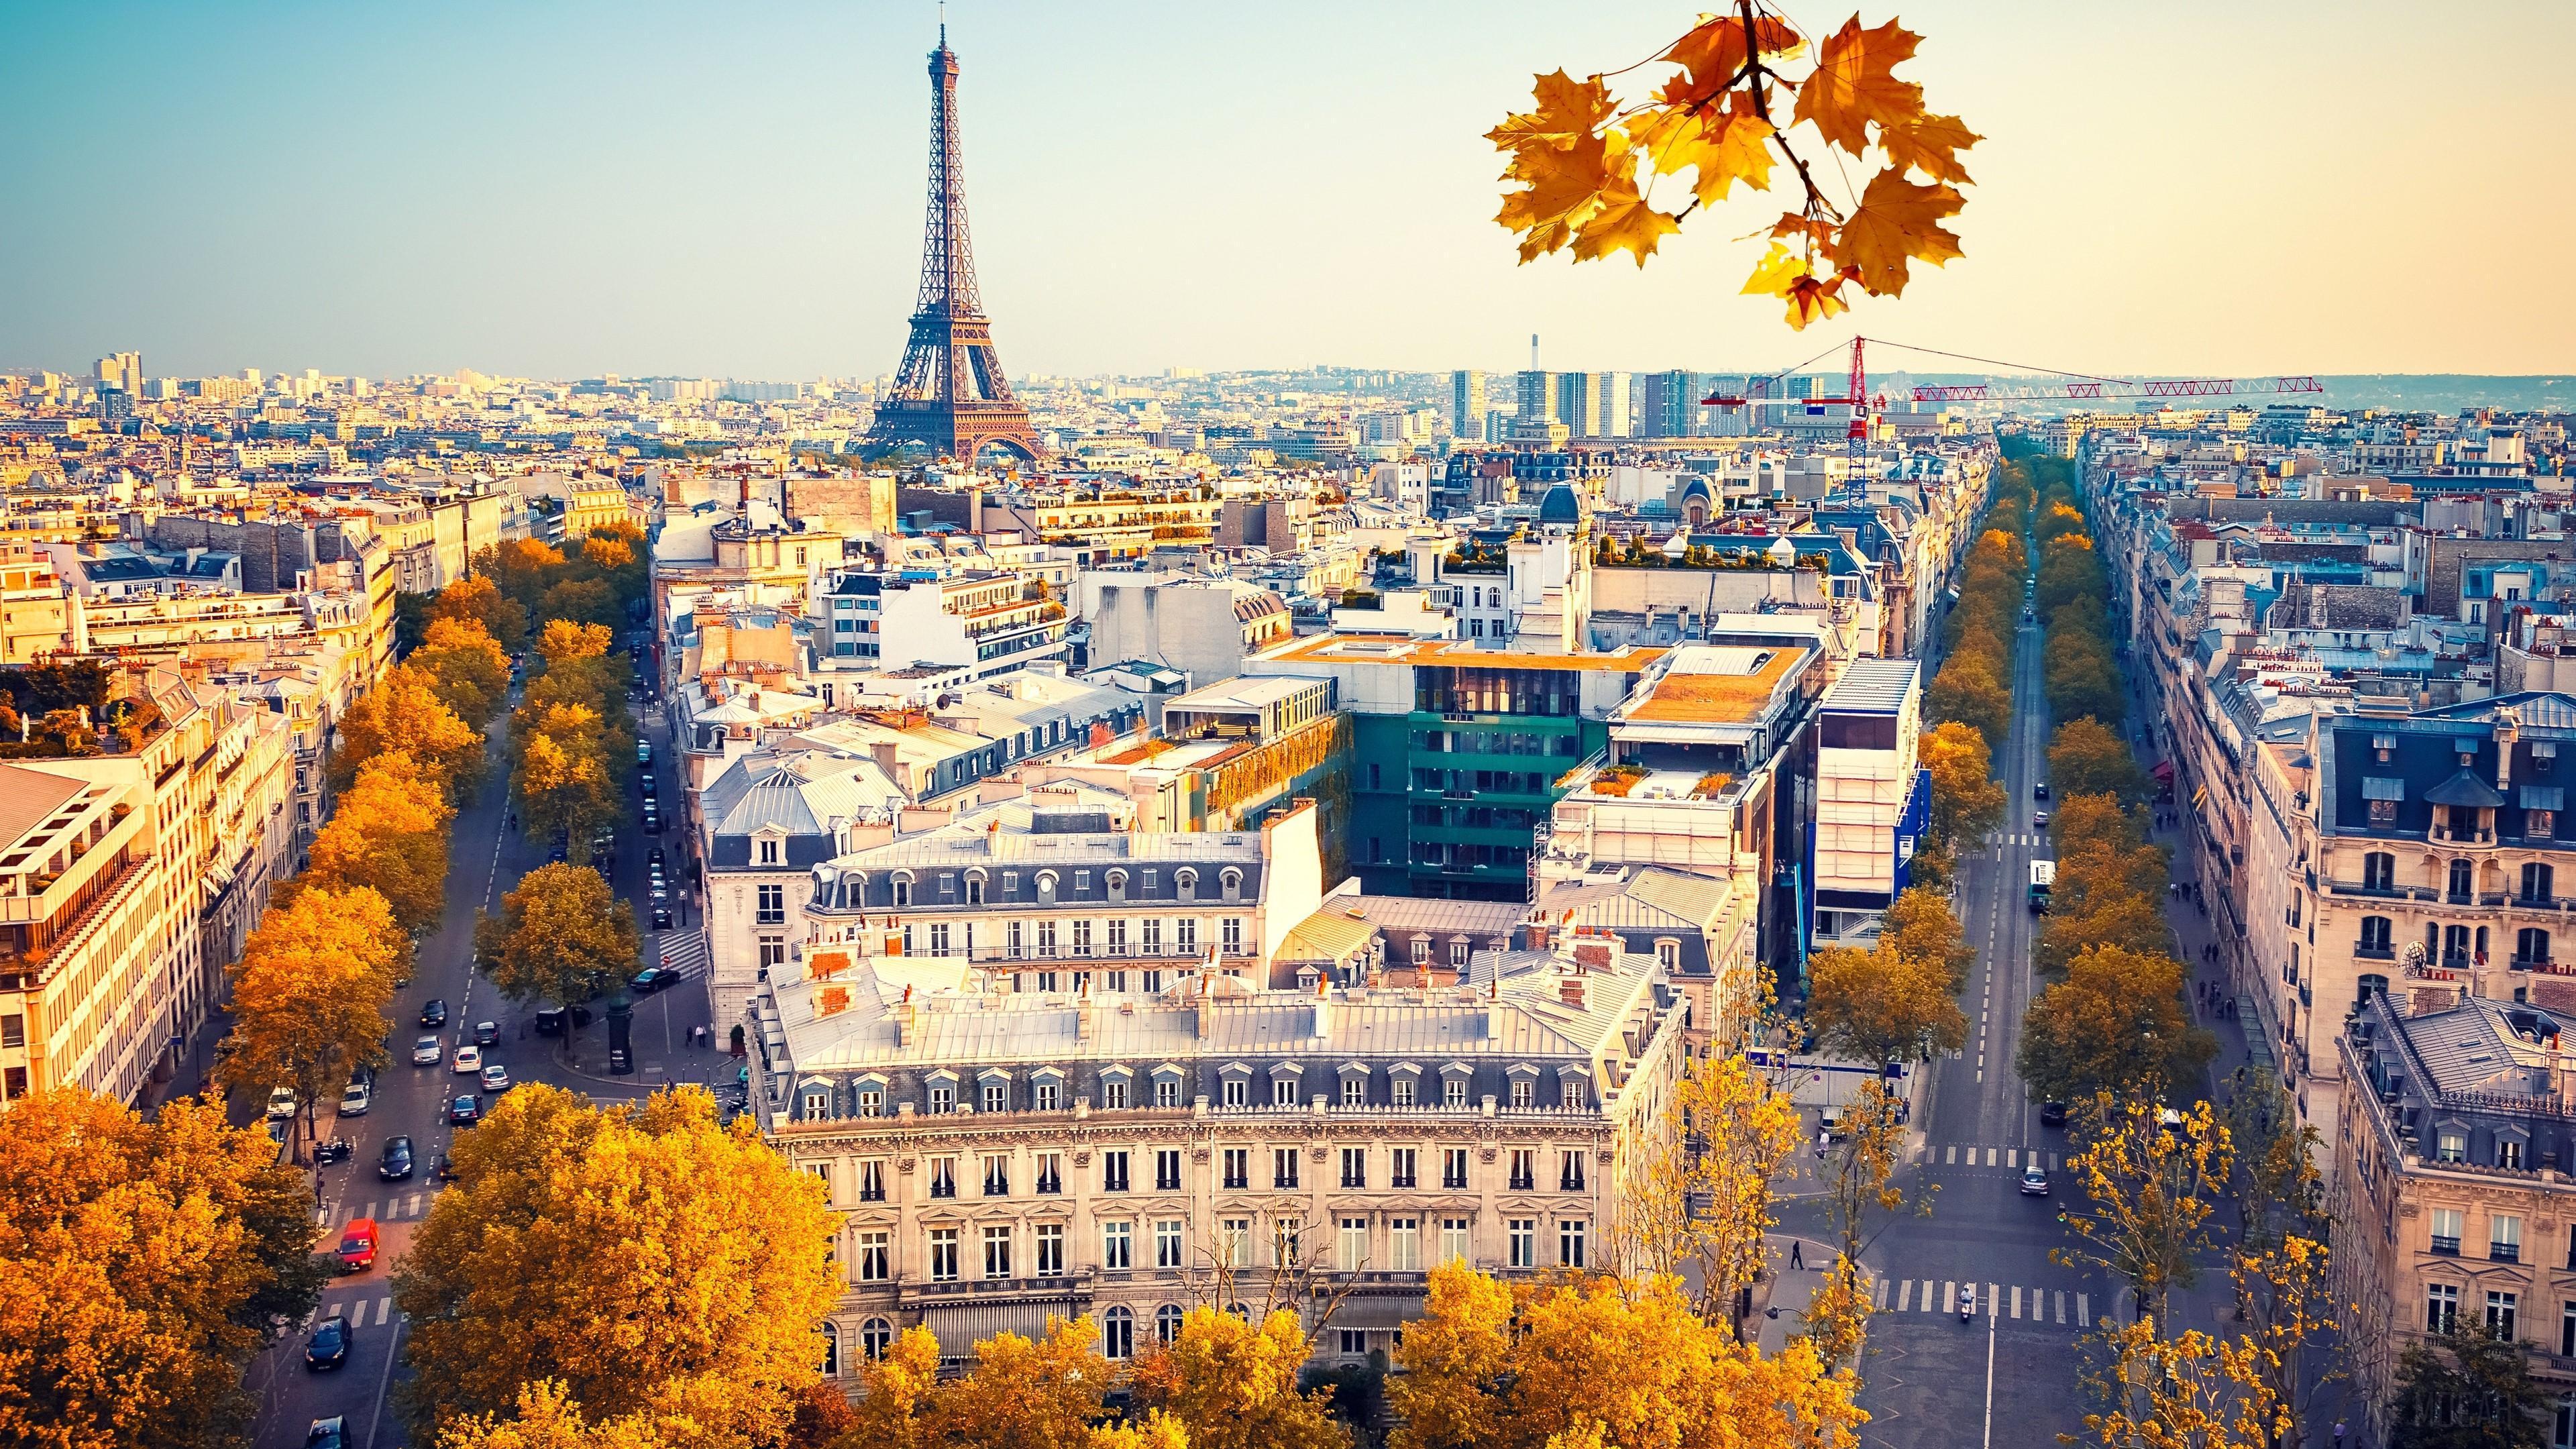 HD wallpaper, City, Street 4K, Cityscape, Eiffel Tower, Fall, Building, France, Paris